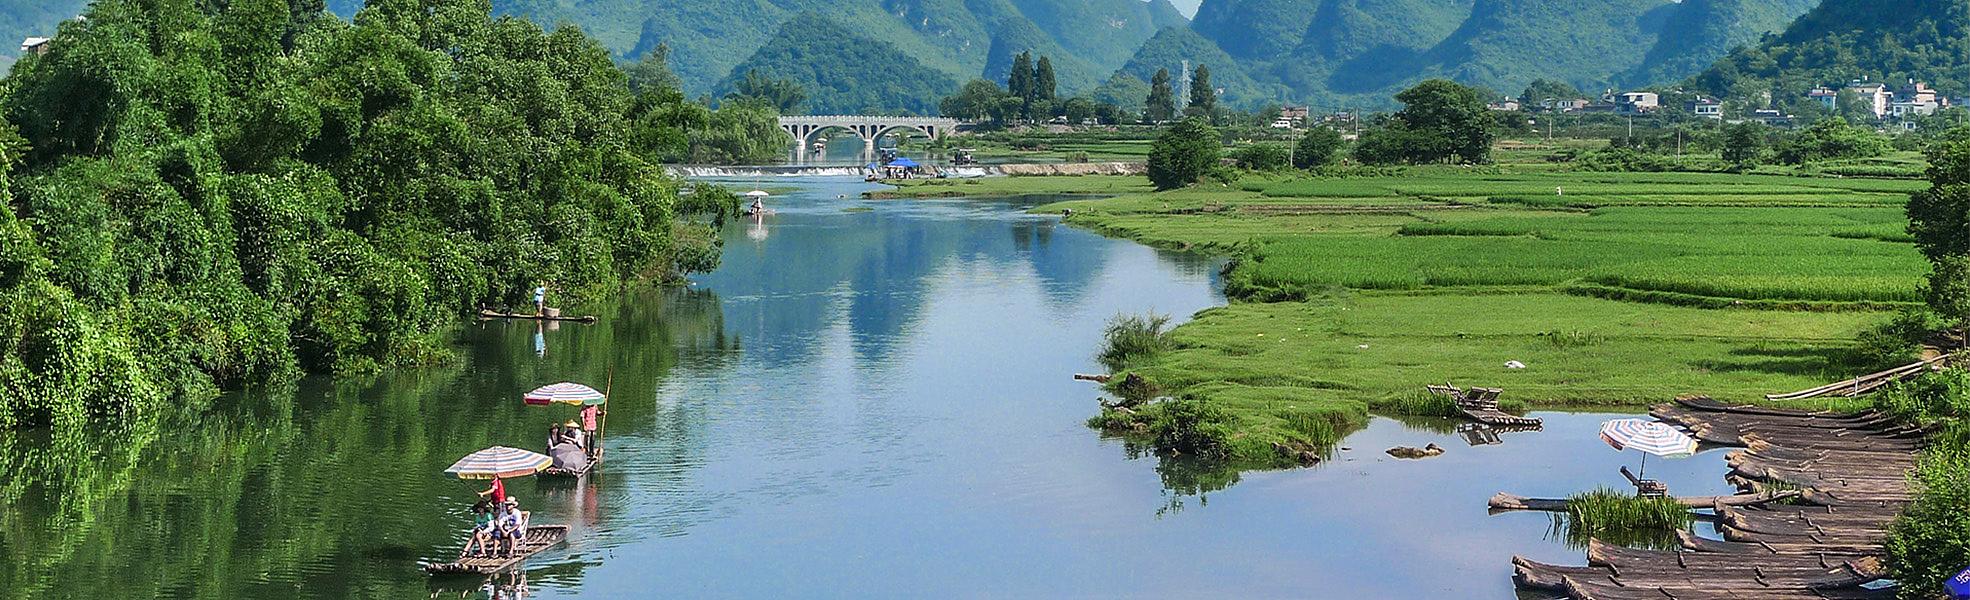 Yulong River